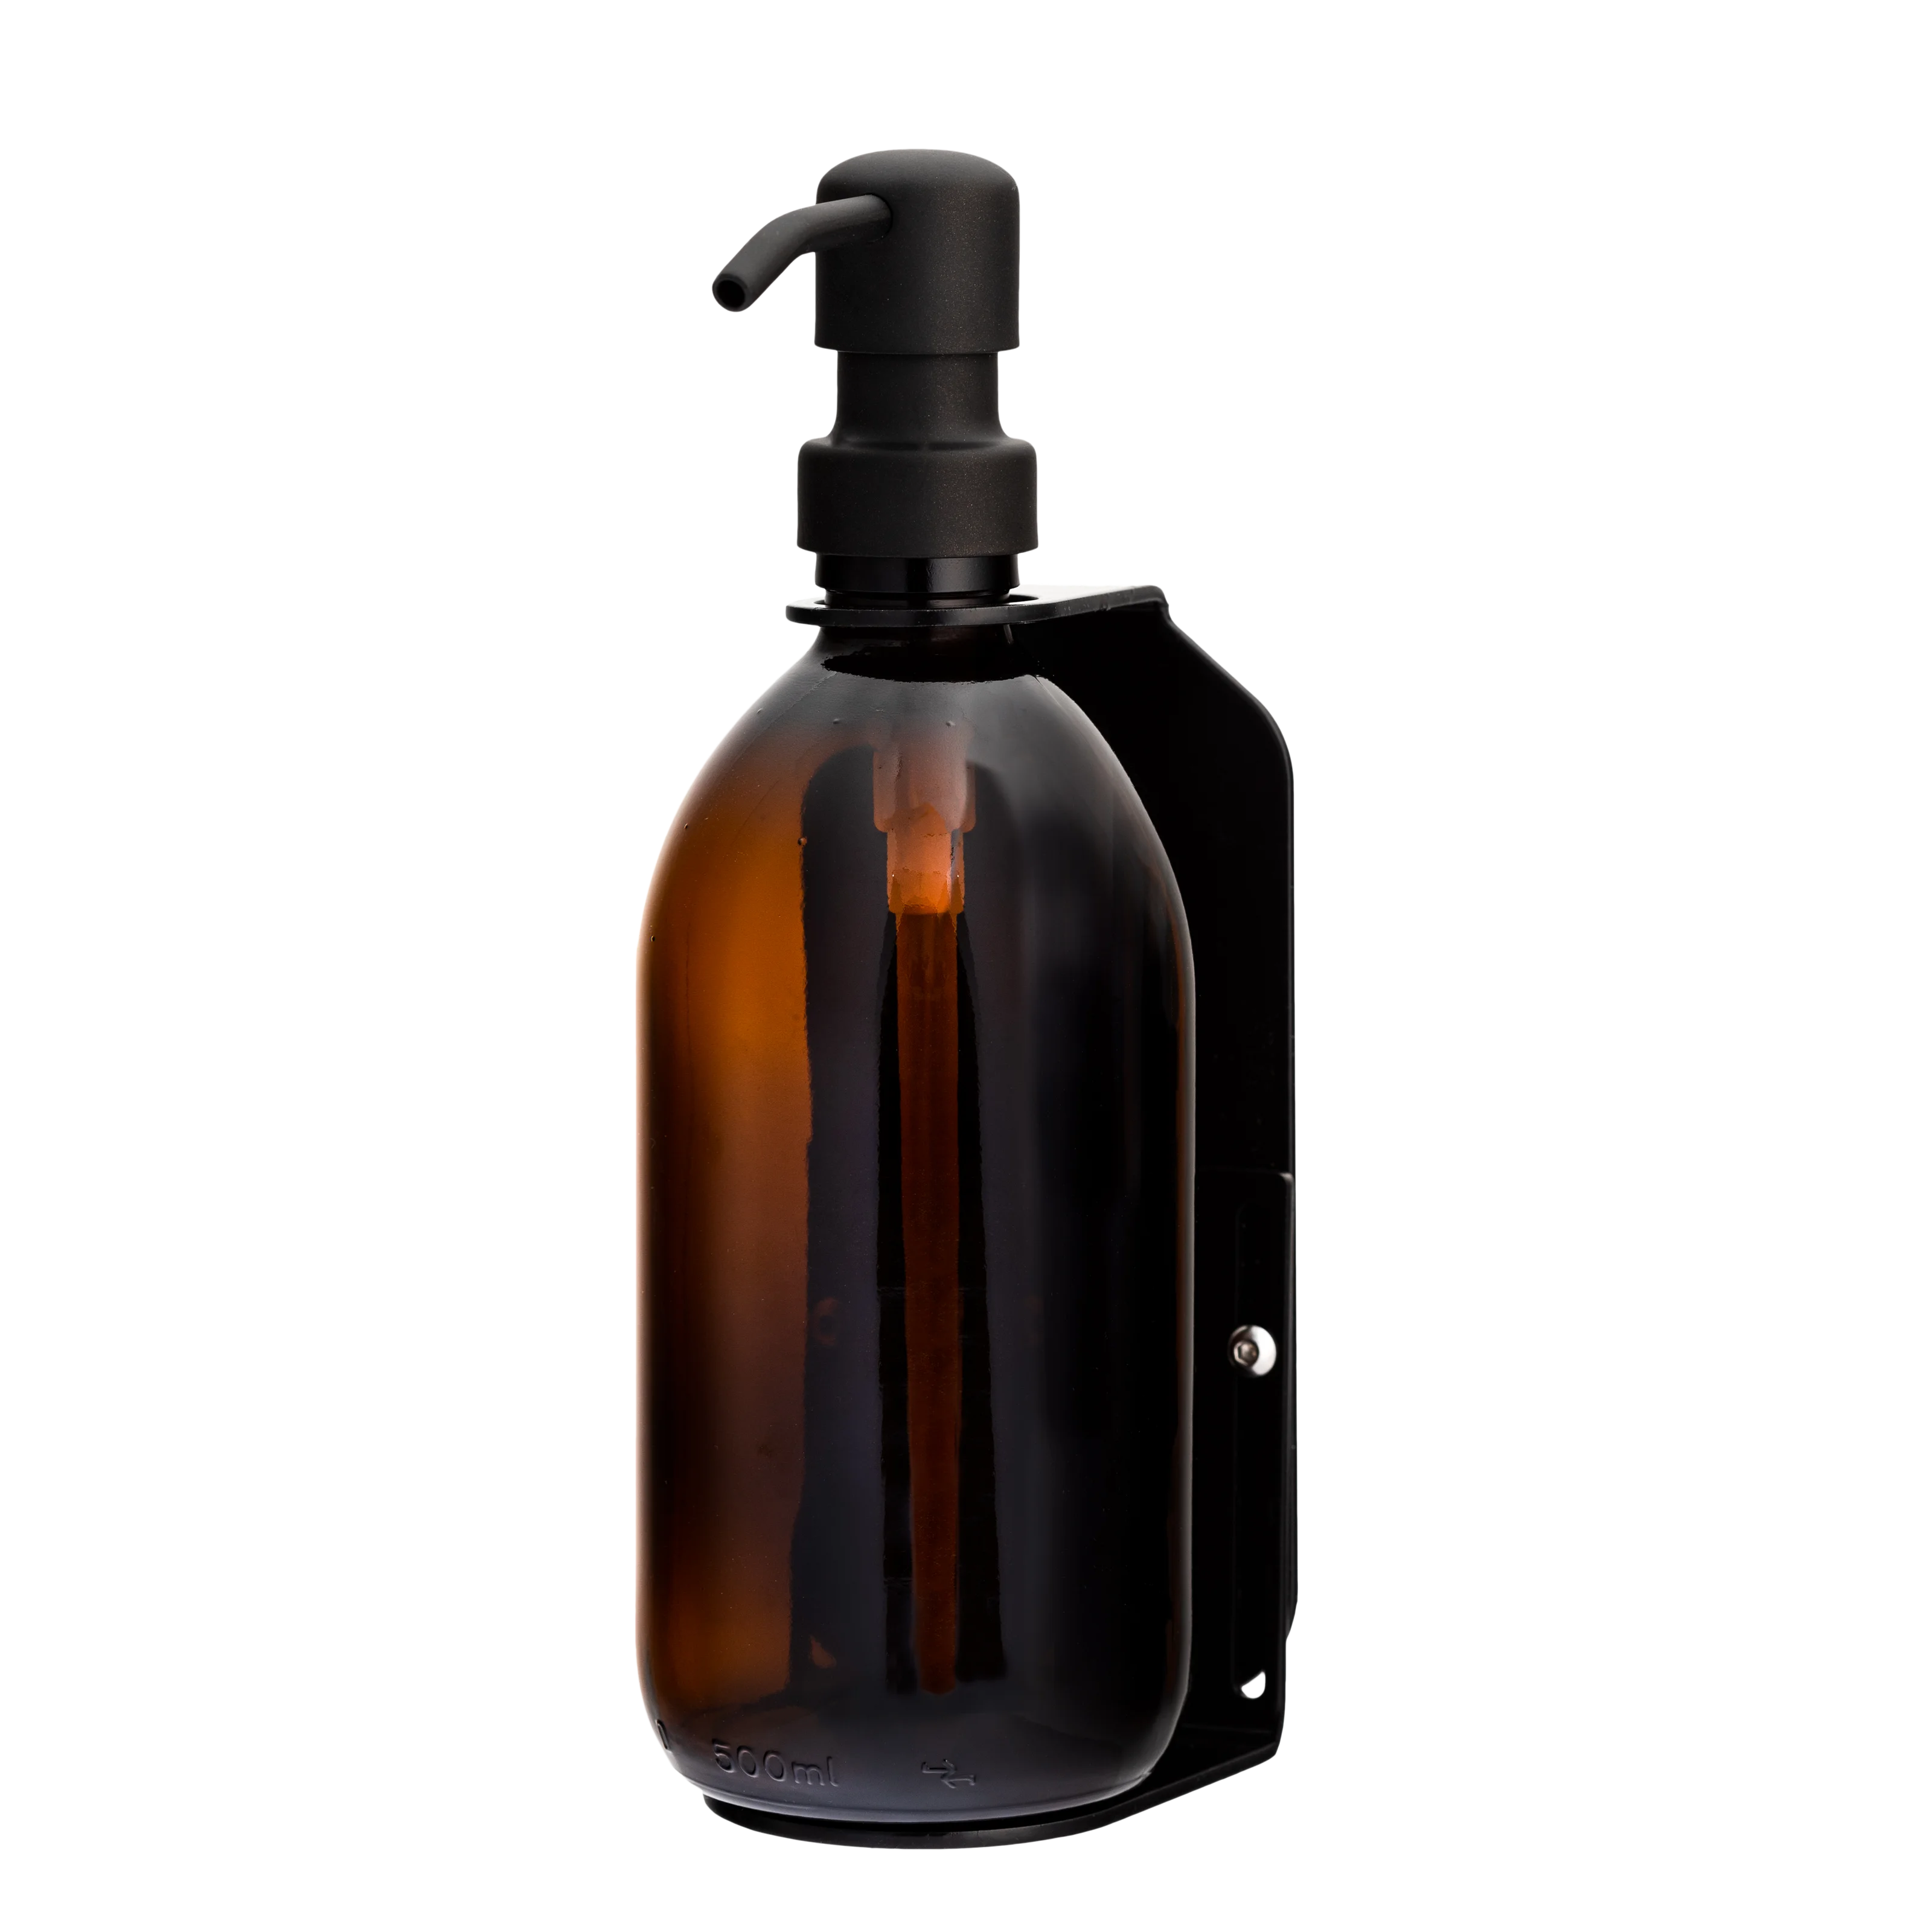 Black Single Wall Mounted Soap Dispenser 500ml Amber dispenser with black metal pump